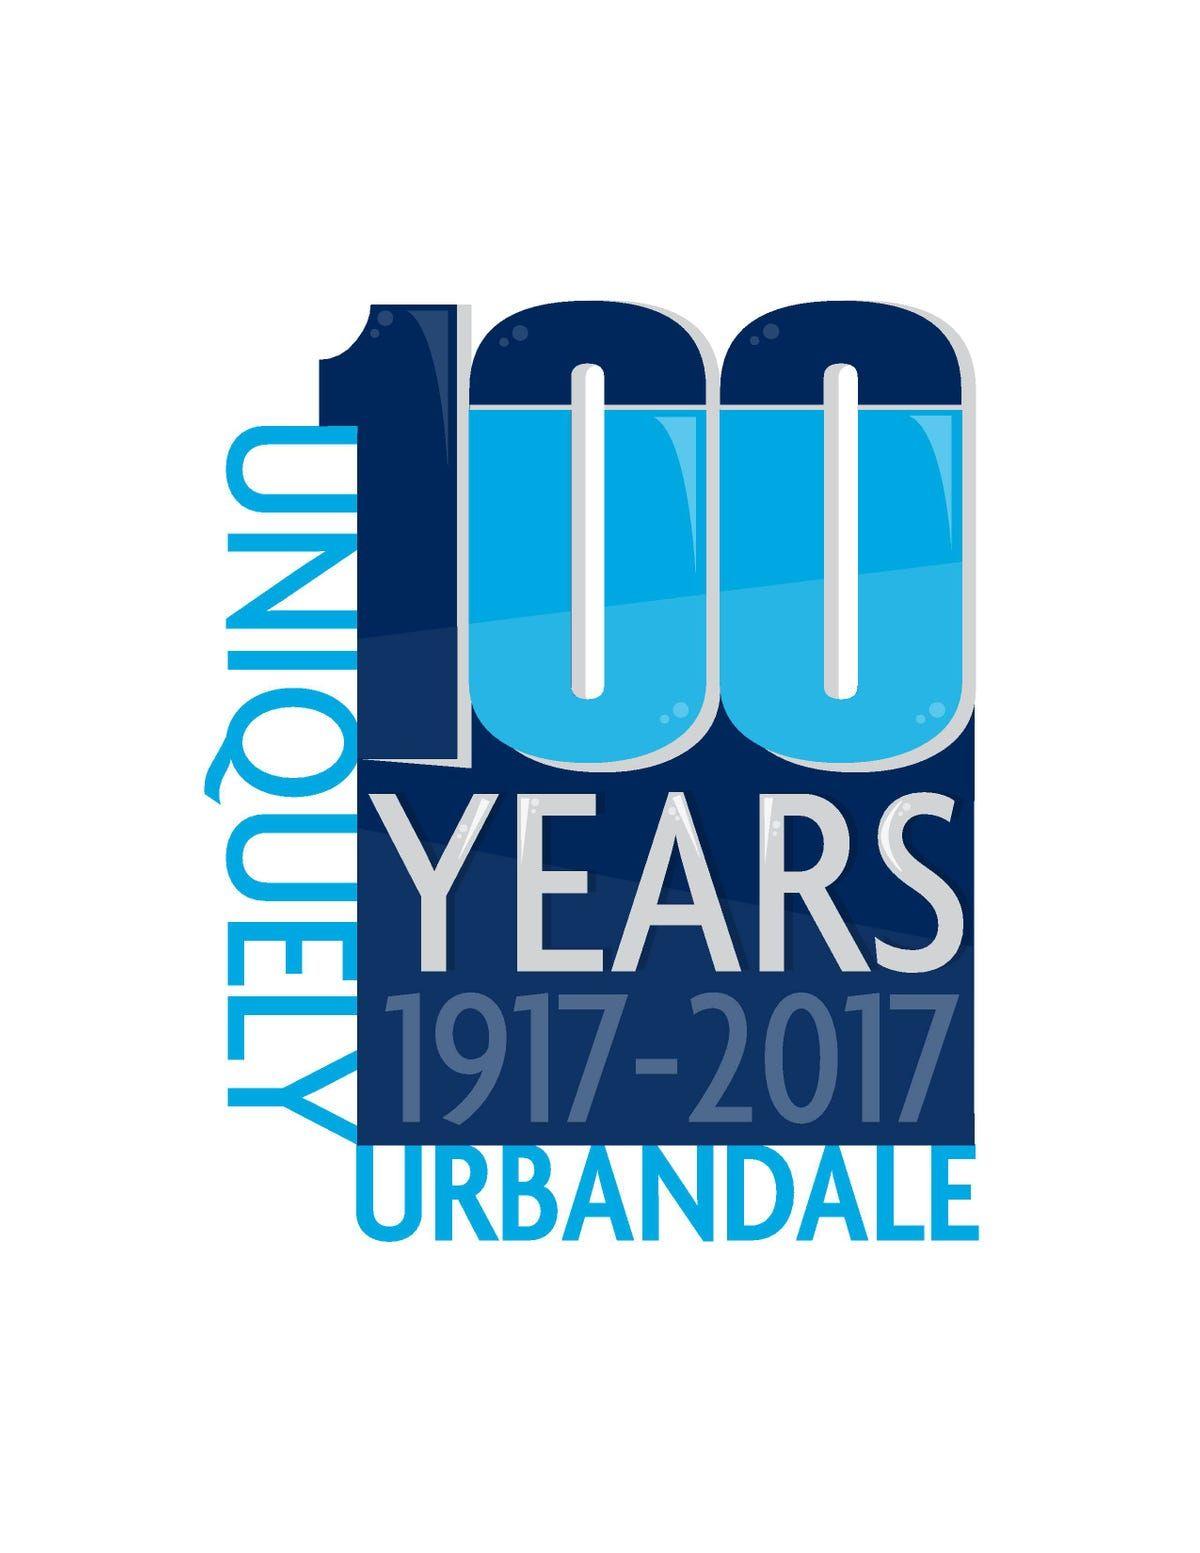 Urbandale Logo - Urbandale centennial logo designer inspired by father